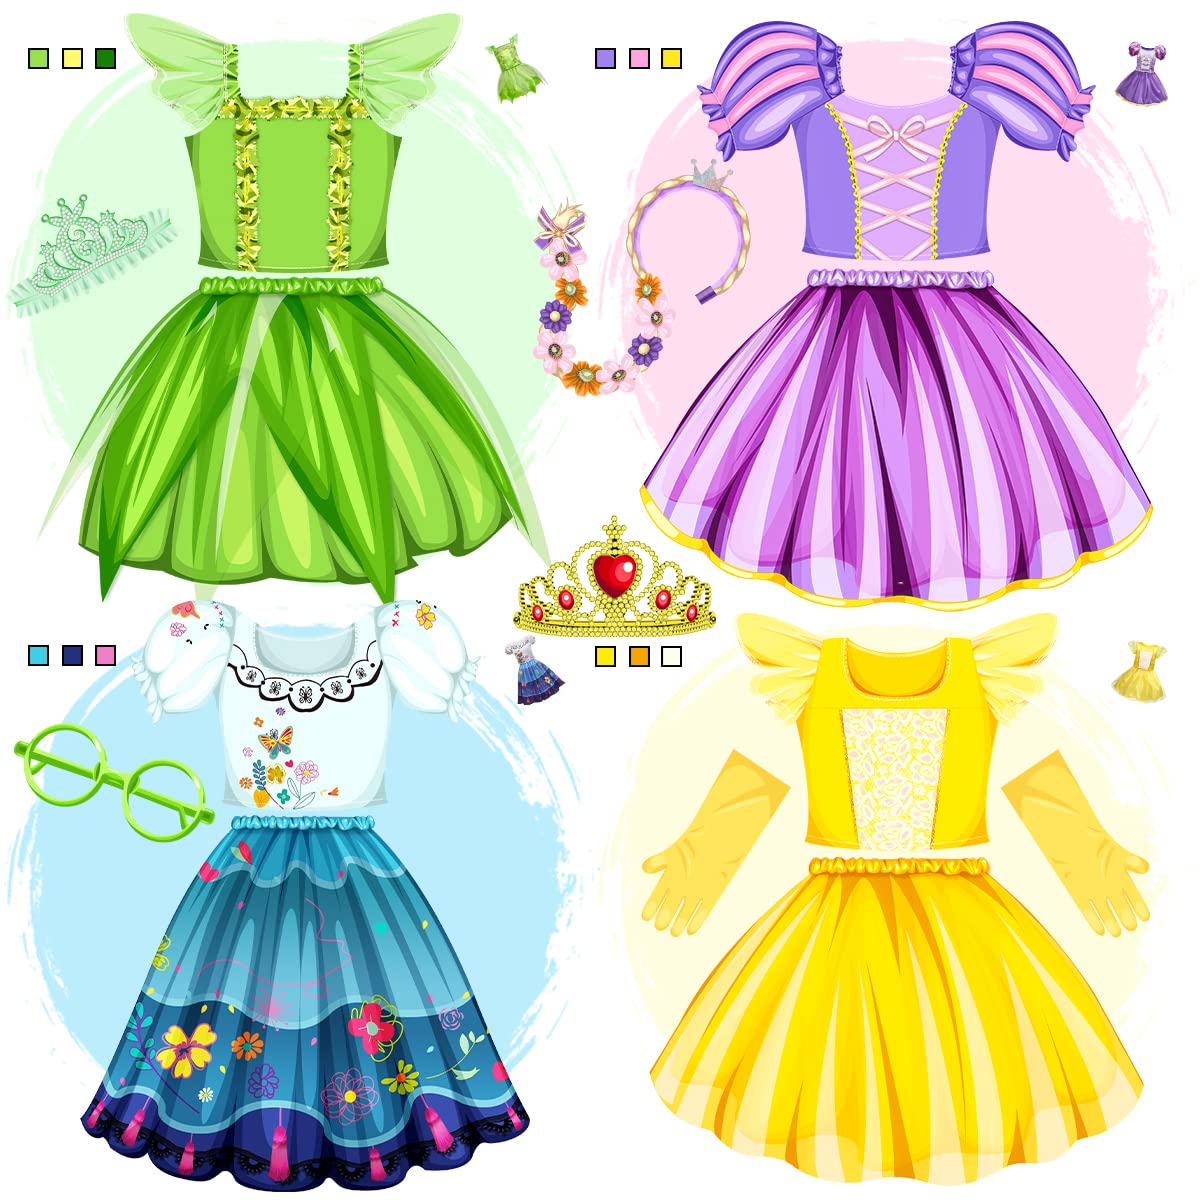 Meland Princess Dress up Trunk - Dress up Clothes for Little Girls - Princess Costume Toy Gift Girls 3-8 Pretend Play